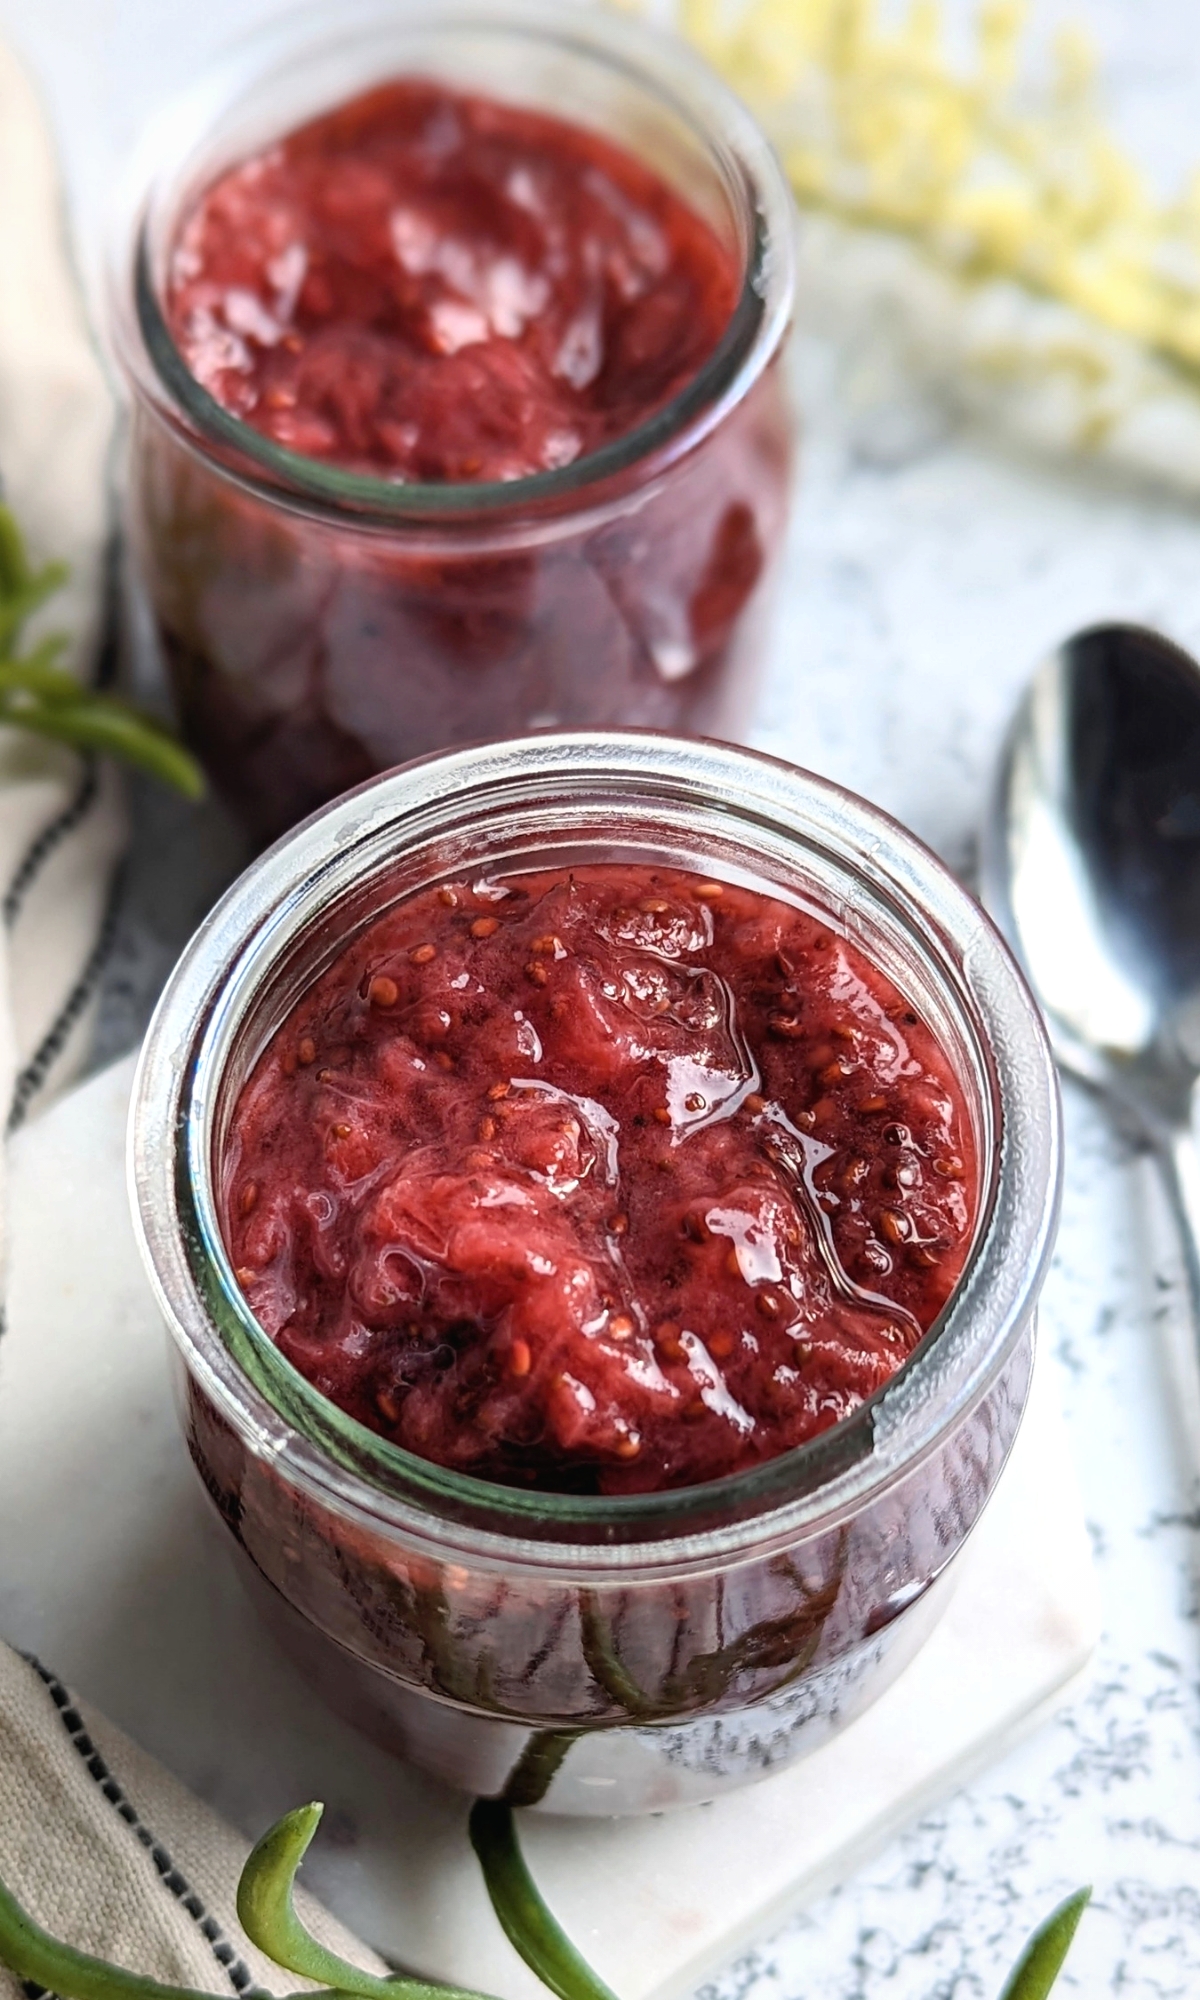 strawberry jam less sugar naturally sweetened strawberry jam recipe easy healthy strawberry jam with honey